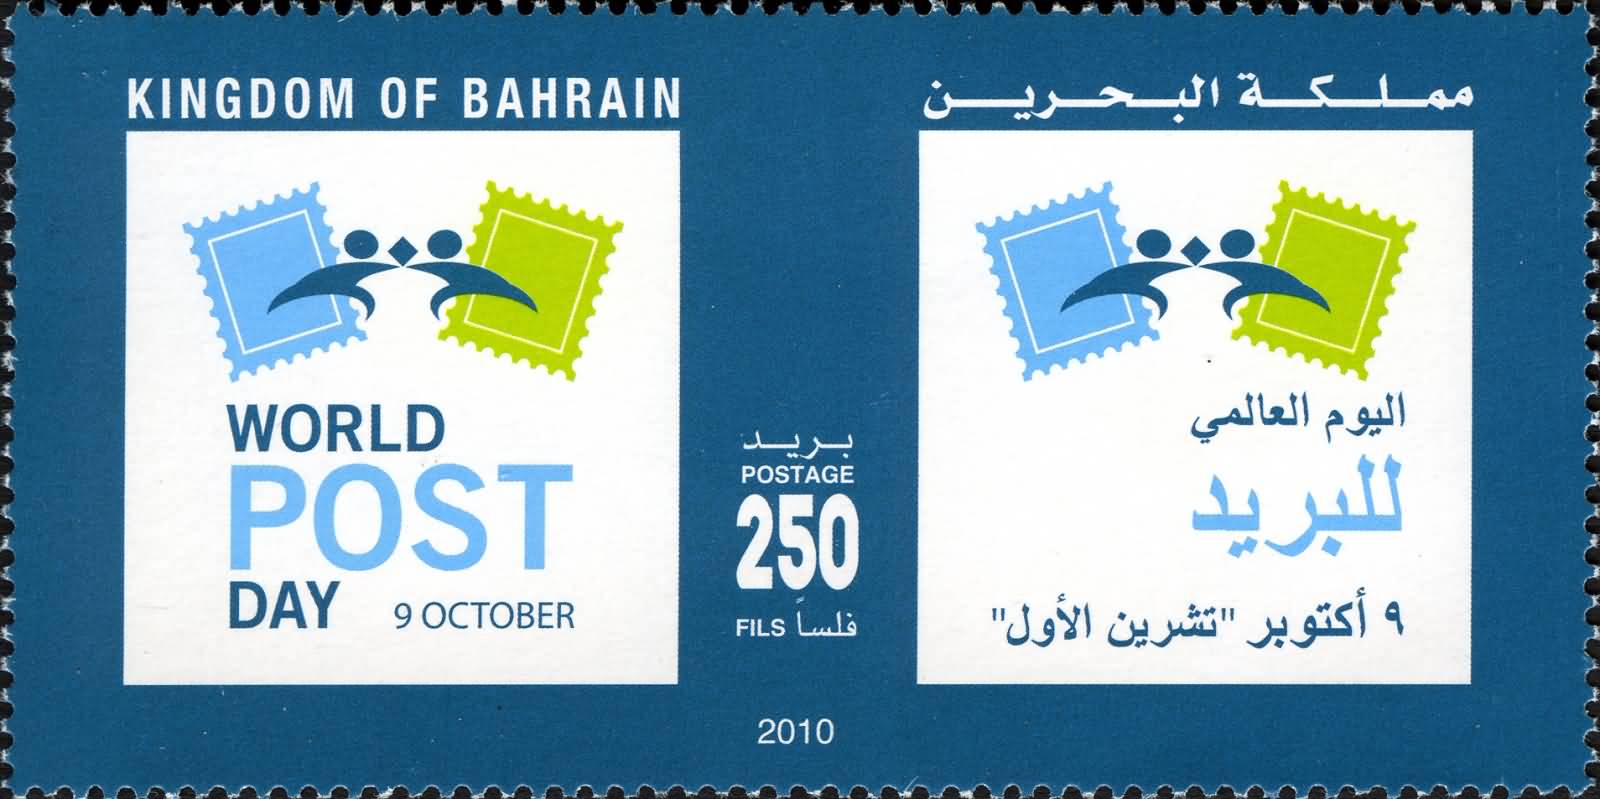 Kingdom Of Bahrain World Post Day 9 October